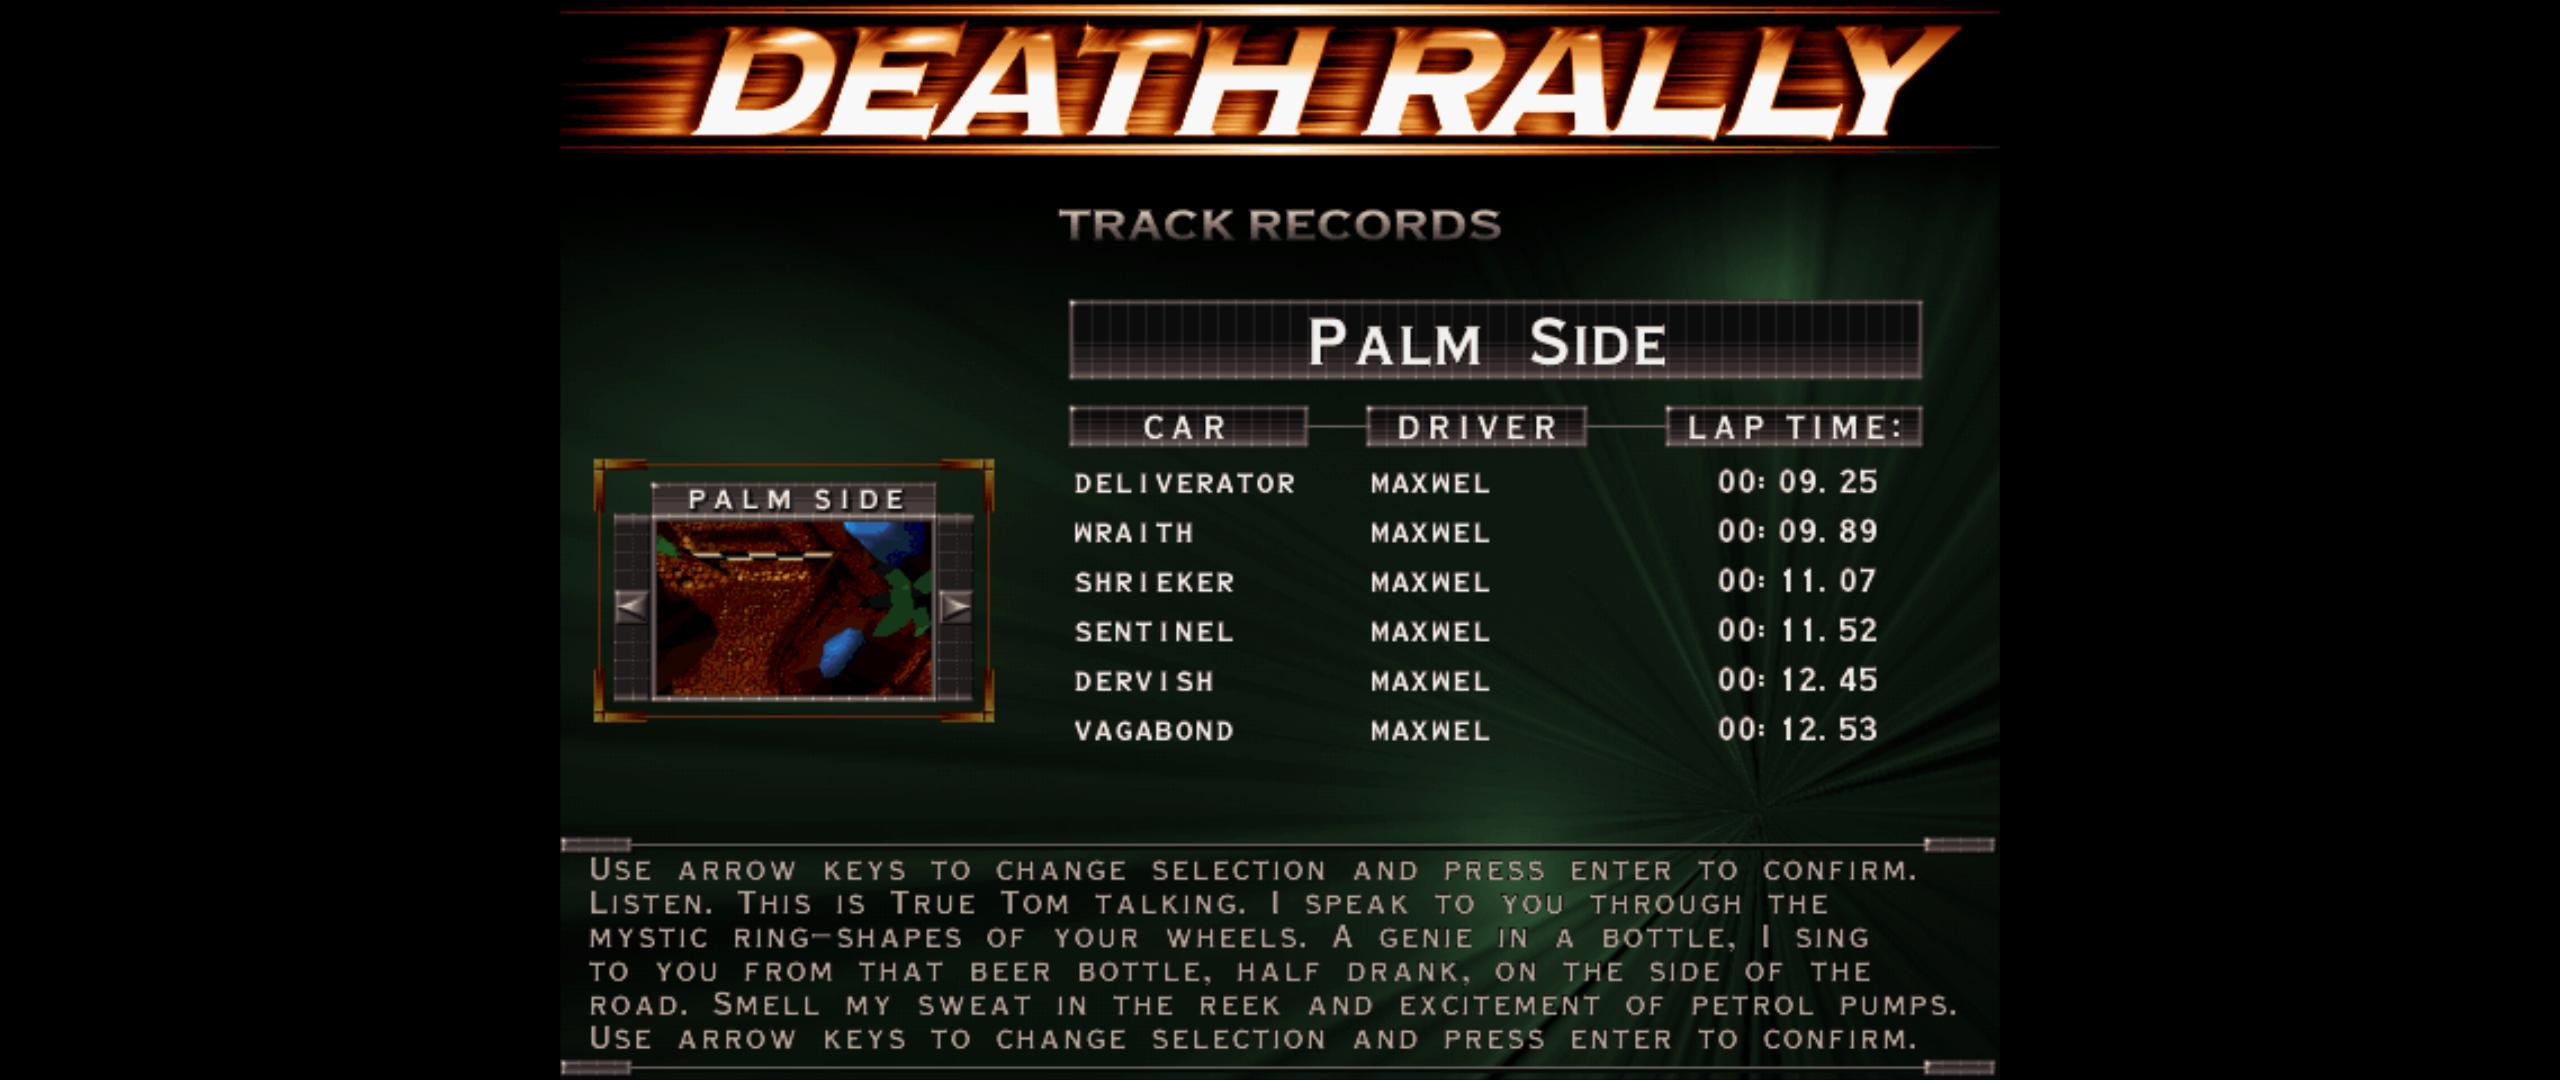 Maxwel: Death Rally [Palm Side, Sentinel Car] (PC) 0:00:11.52 points on 2016-03-04 05:44:37